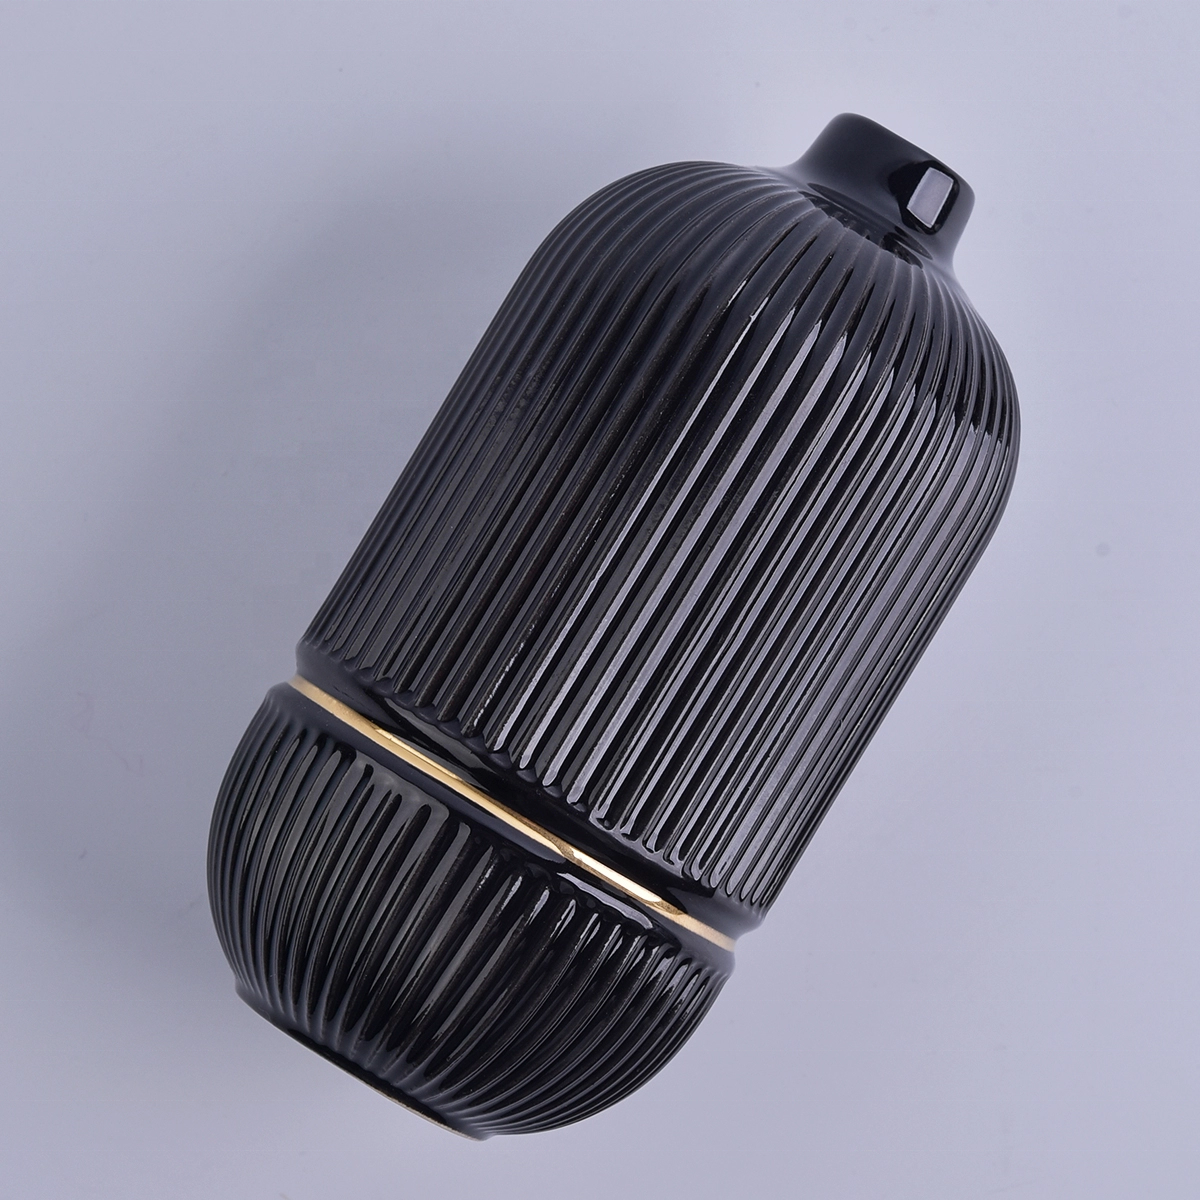 Sunny own design black reed diffuser bottle